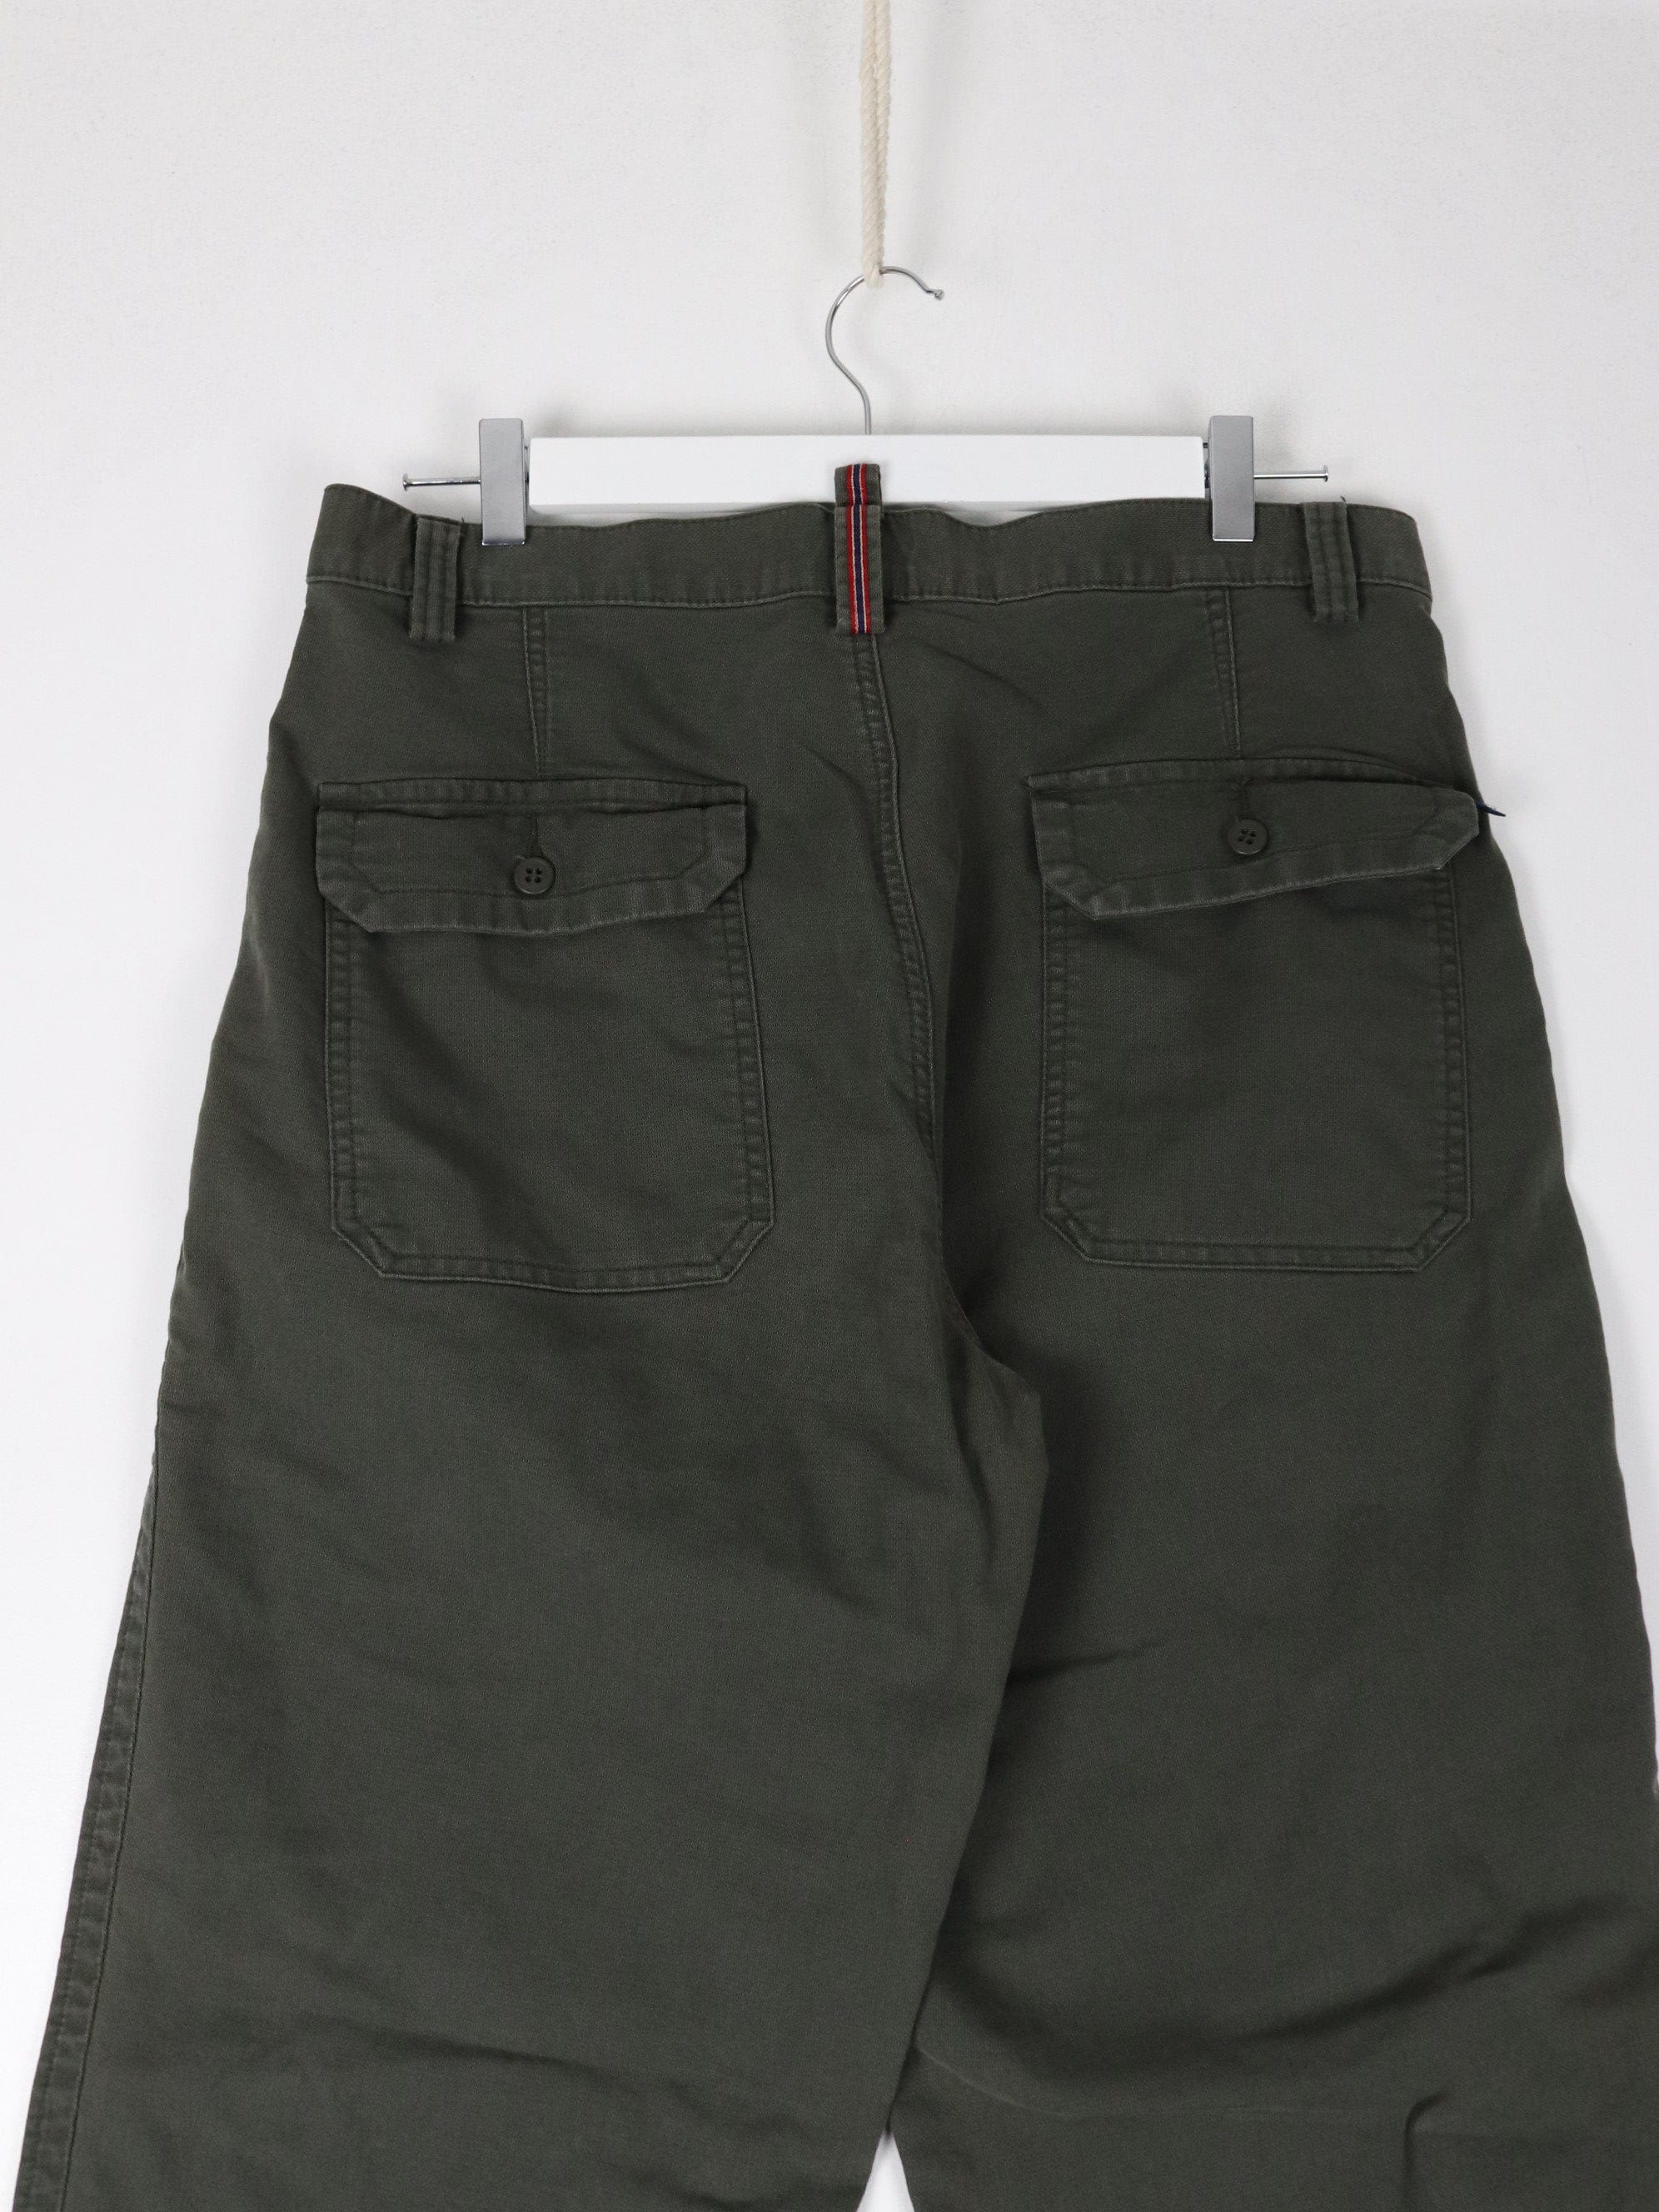 DOCKERS Men's Original Fit Cargo Pants - Bob's Stores